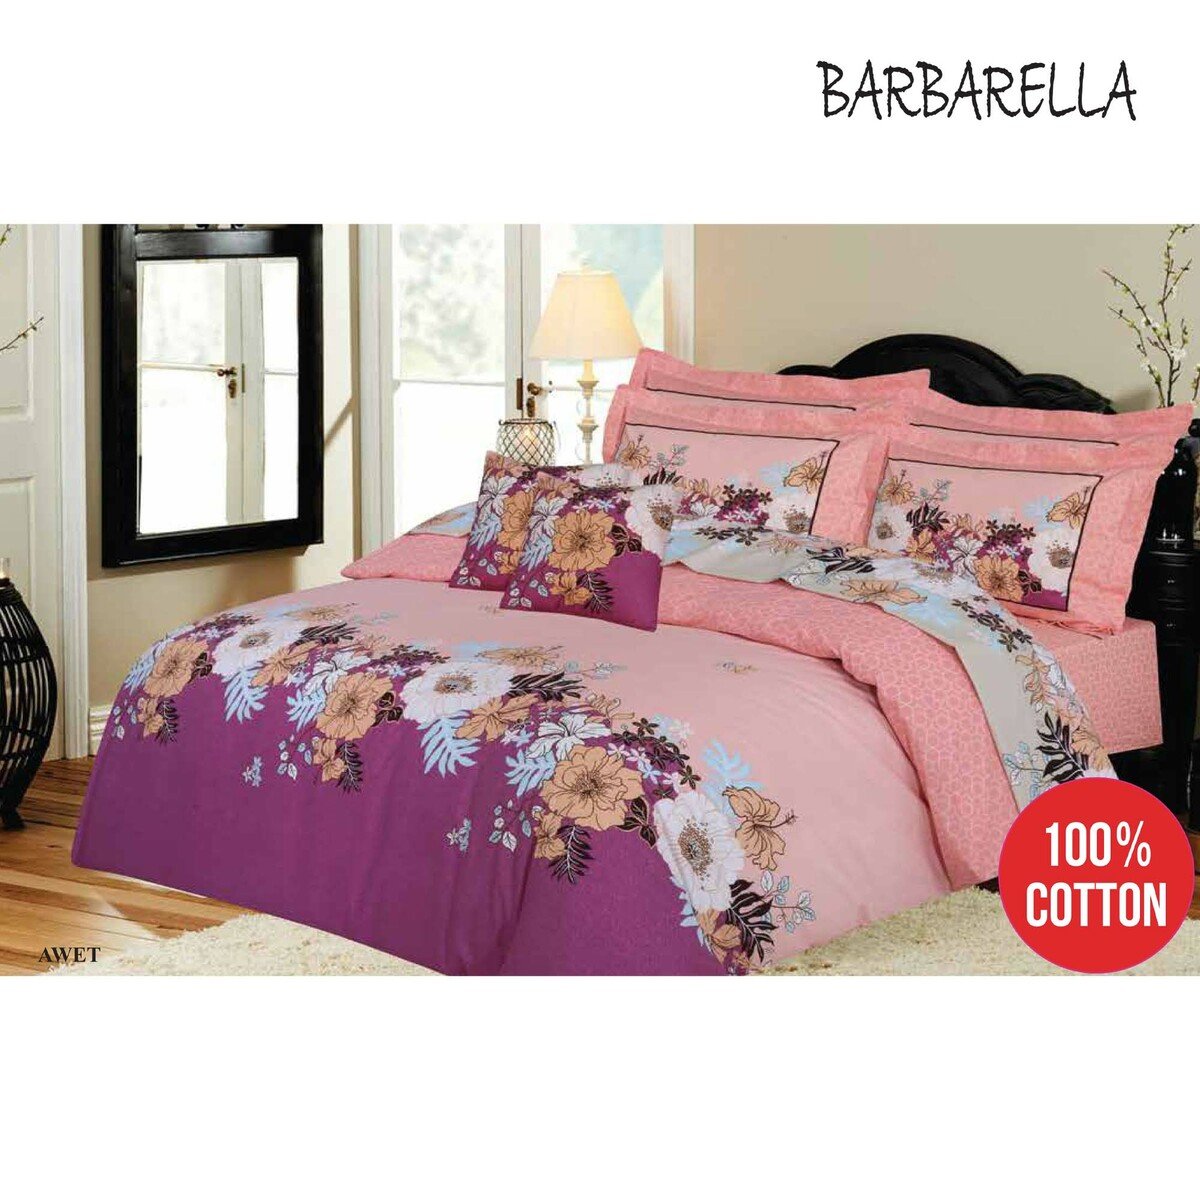 Barbarella Comforter King 241x259cm Awet 4pcs Set